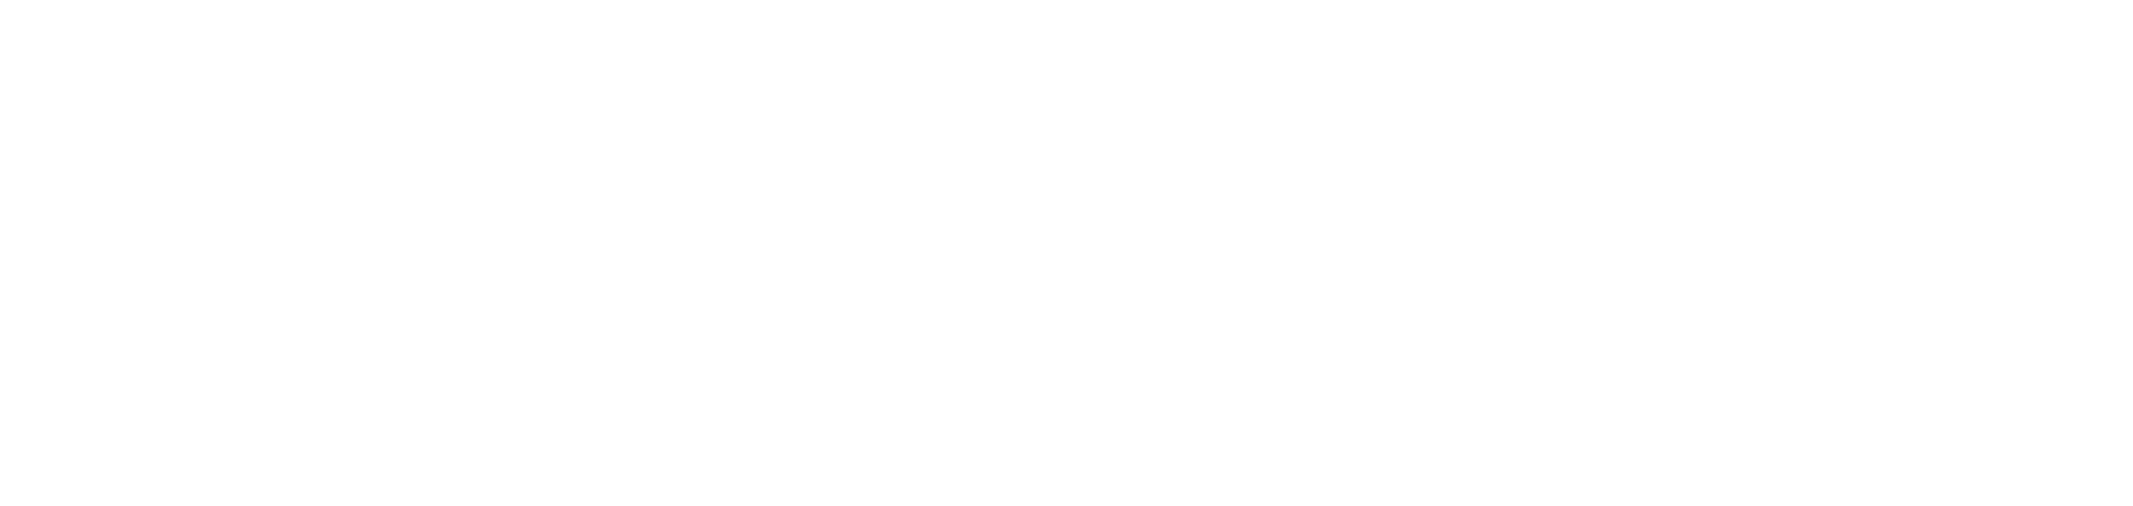 DeepSearchPro.com logo